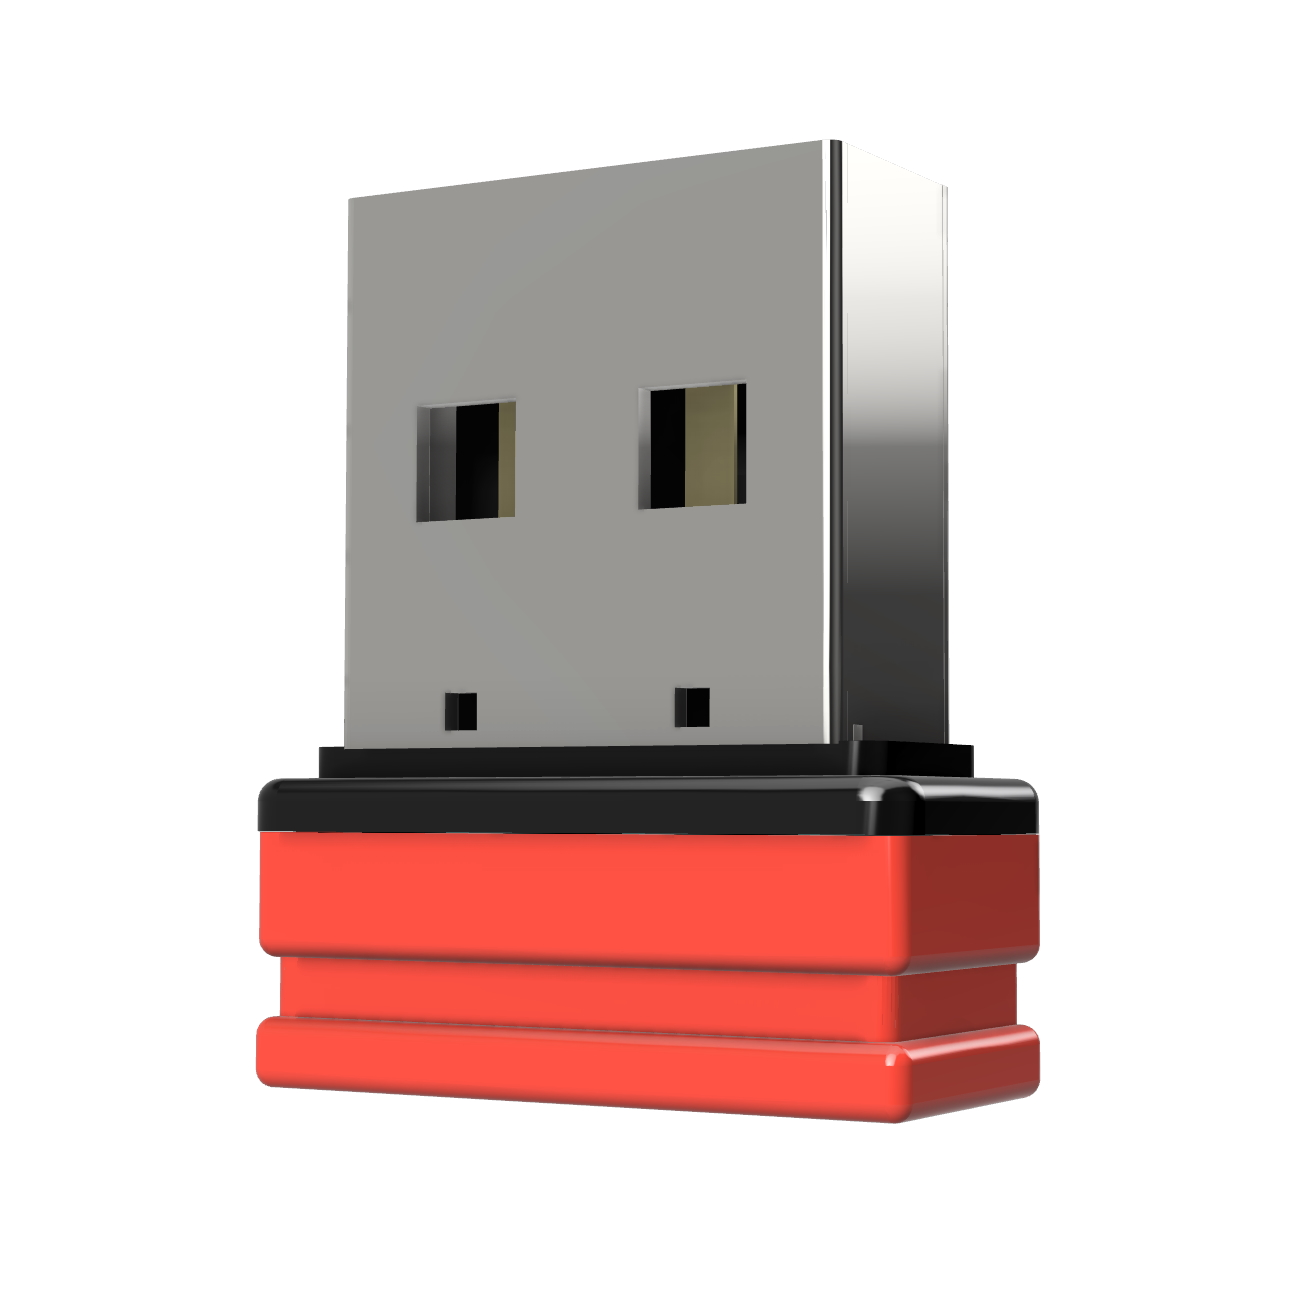 2 (Rot/Schwarz, ®ULTRA GB) USB Mini USB-Stick P1 GERMANY